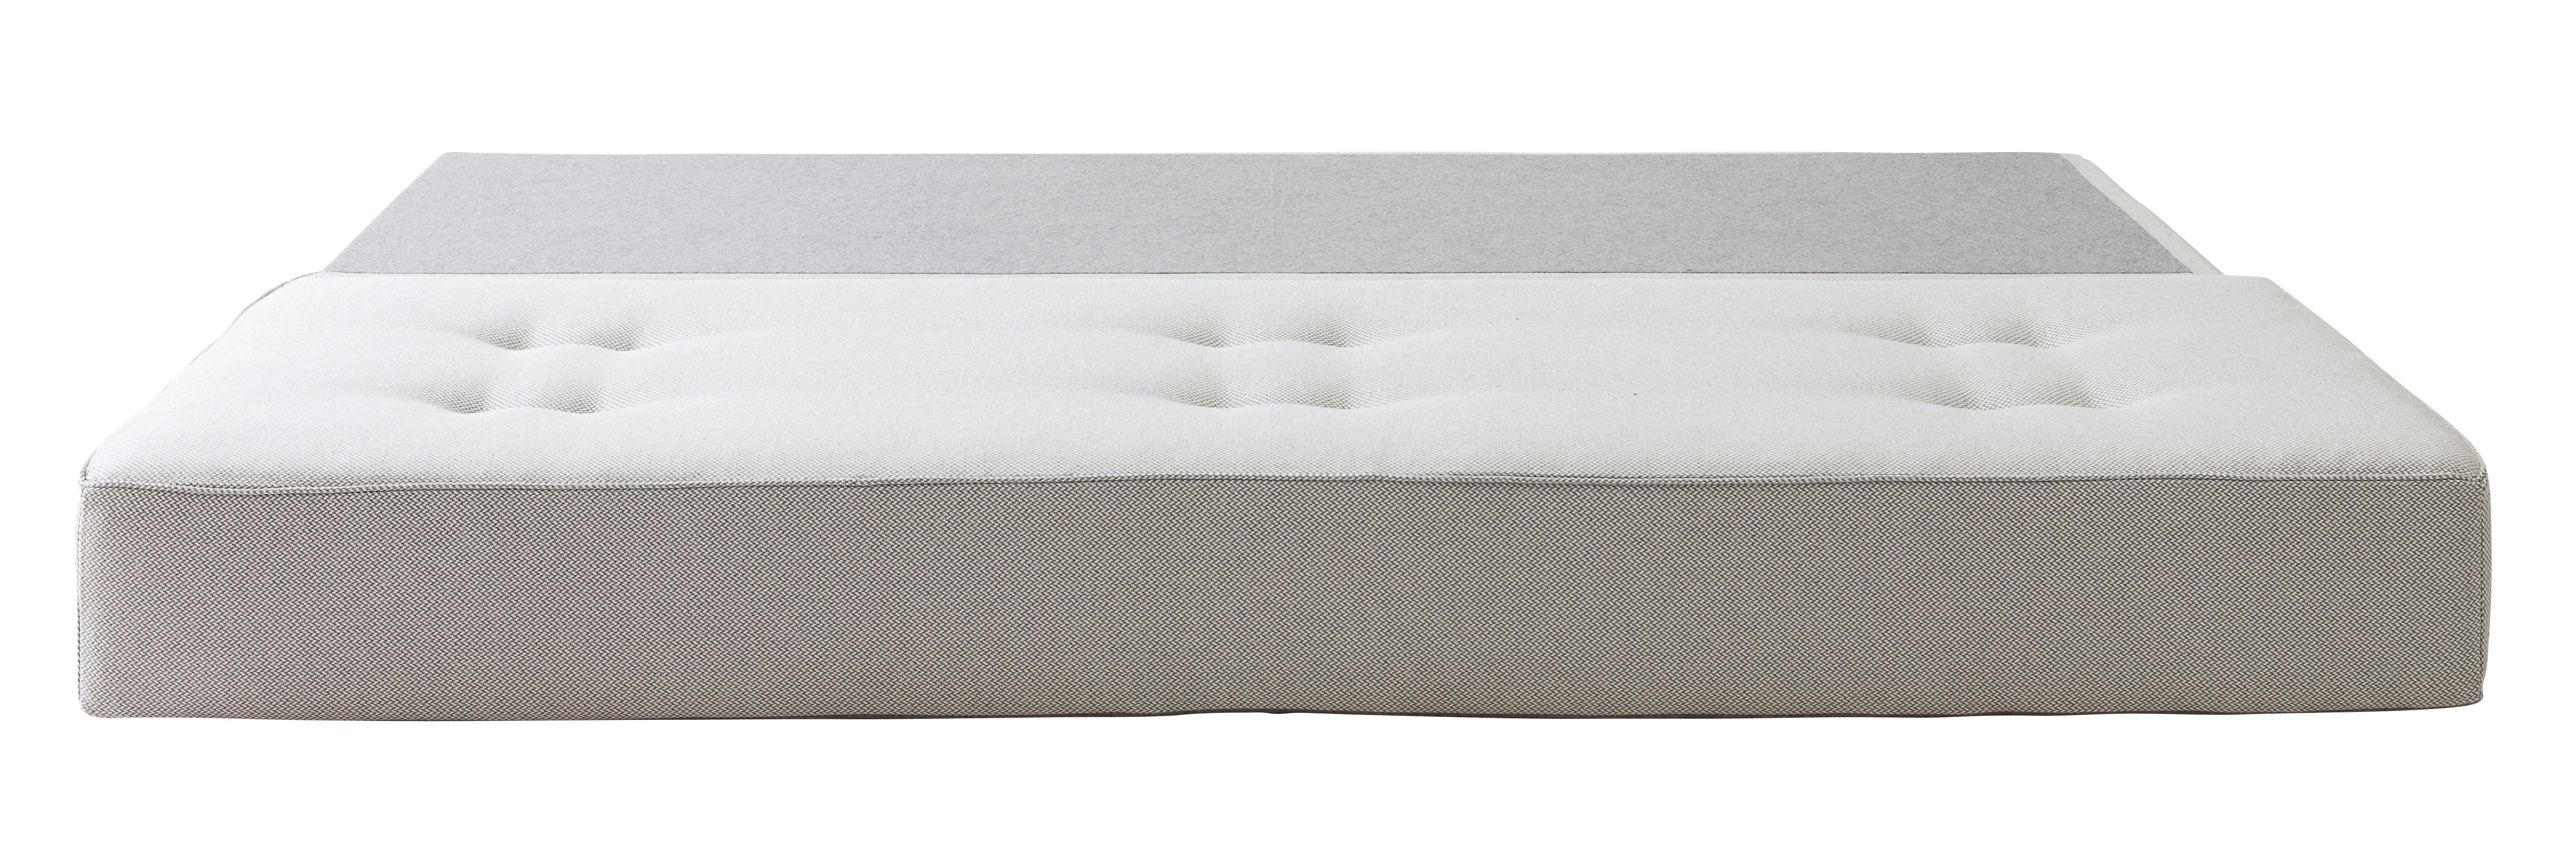 Sofa Bed Frame by Softline